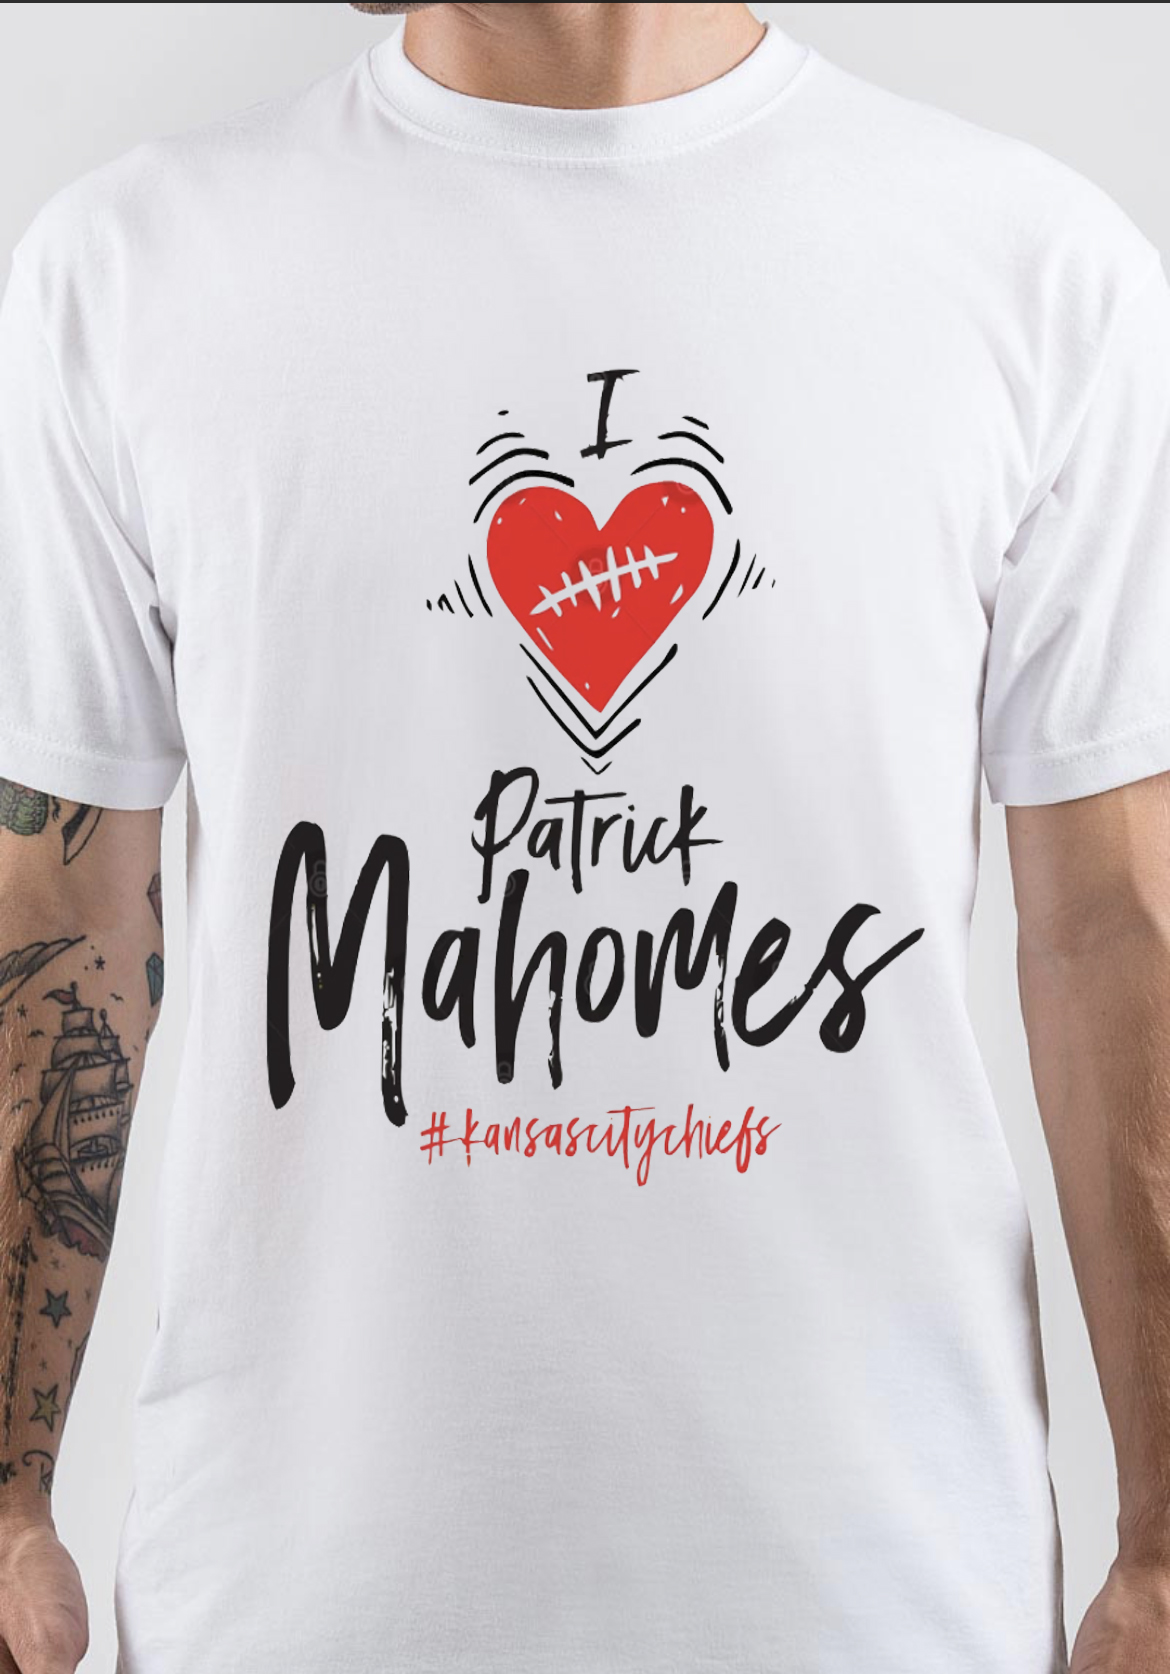 Patrick Mahomes T-Shirt And Merchandise